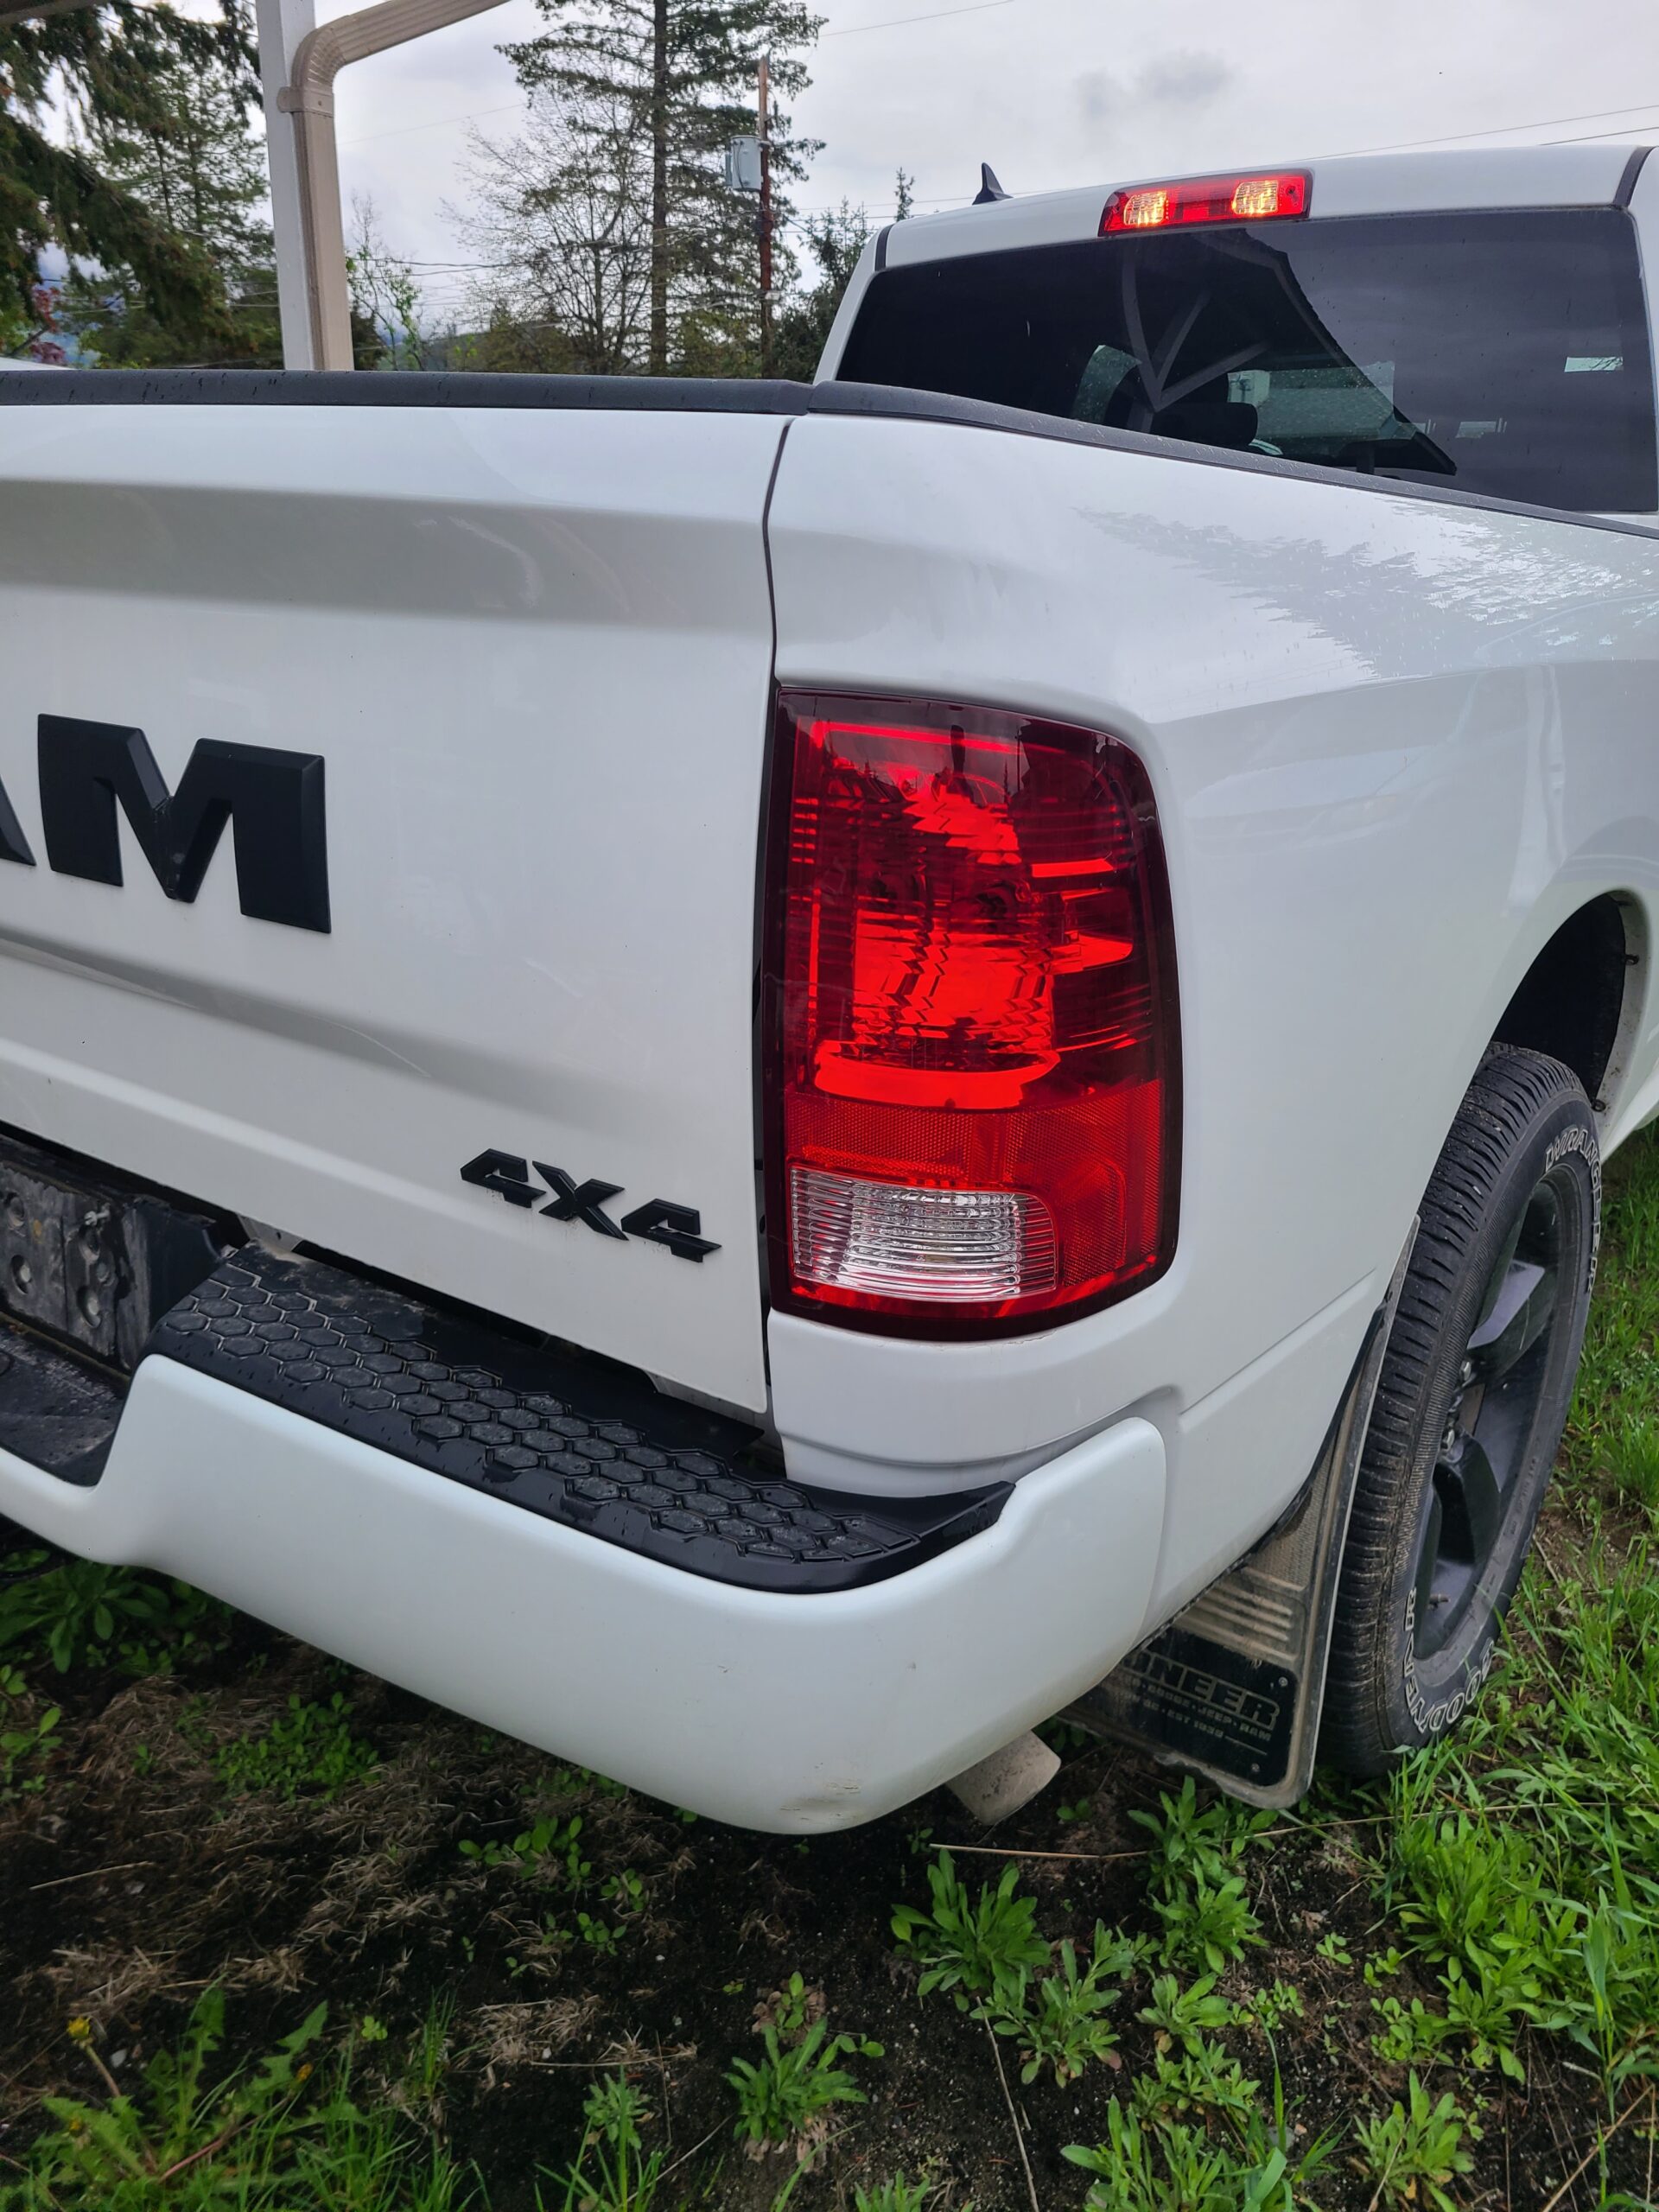 2021 Dodge Ram Classic 1500 #B-KAM-0343 Located in Kamloops